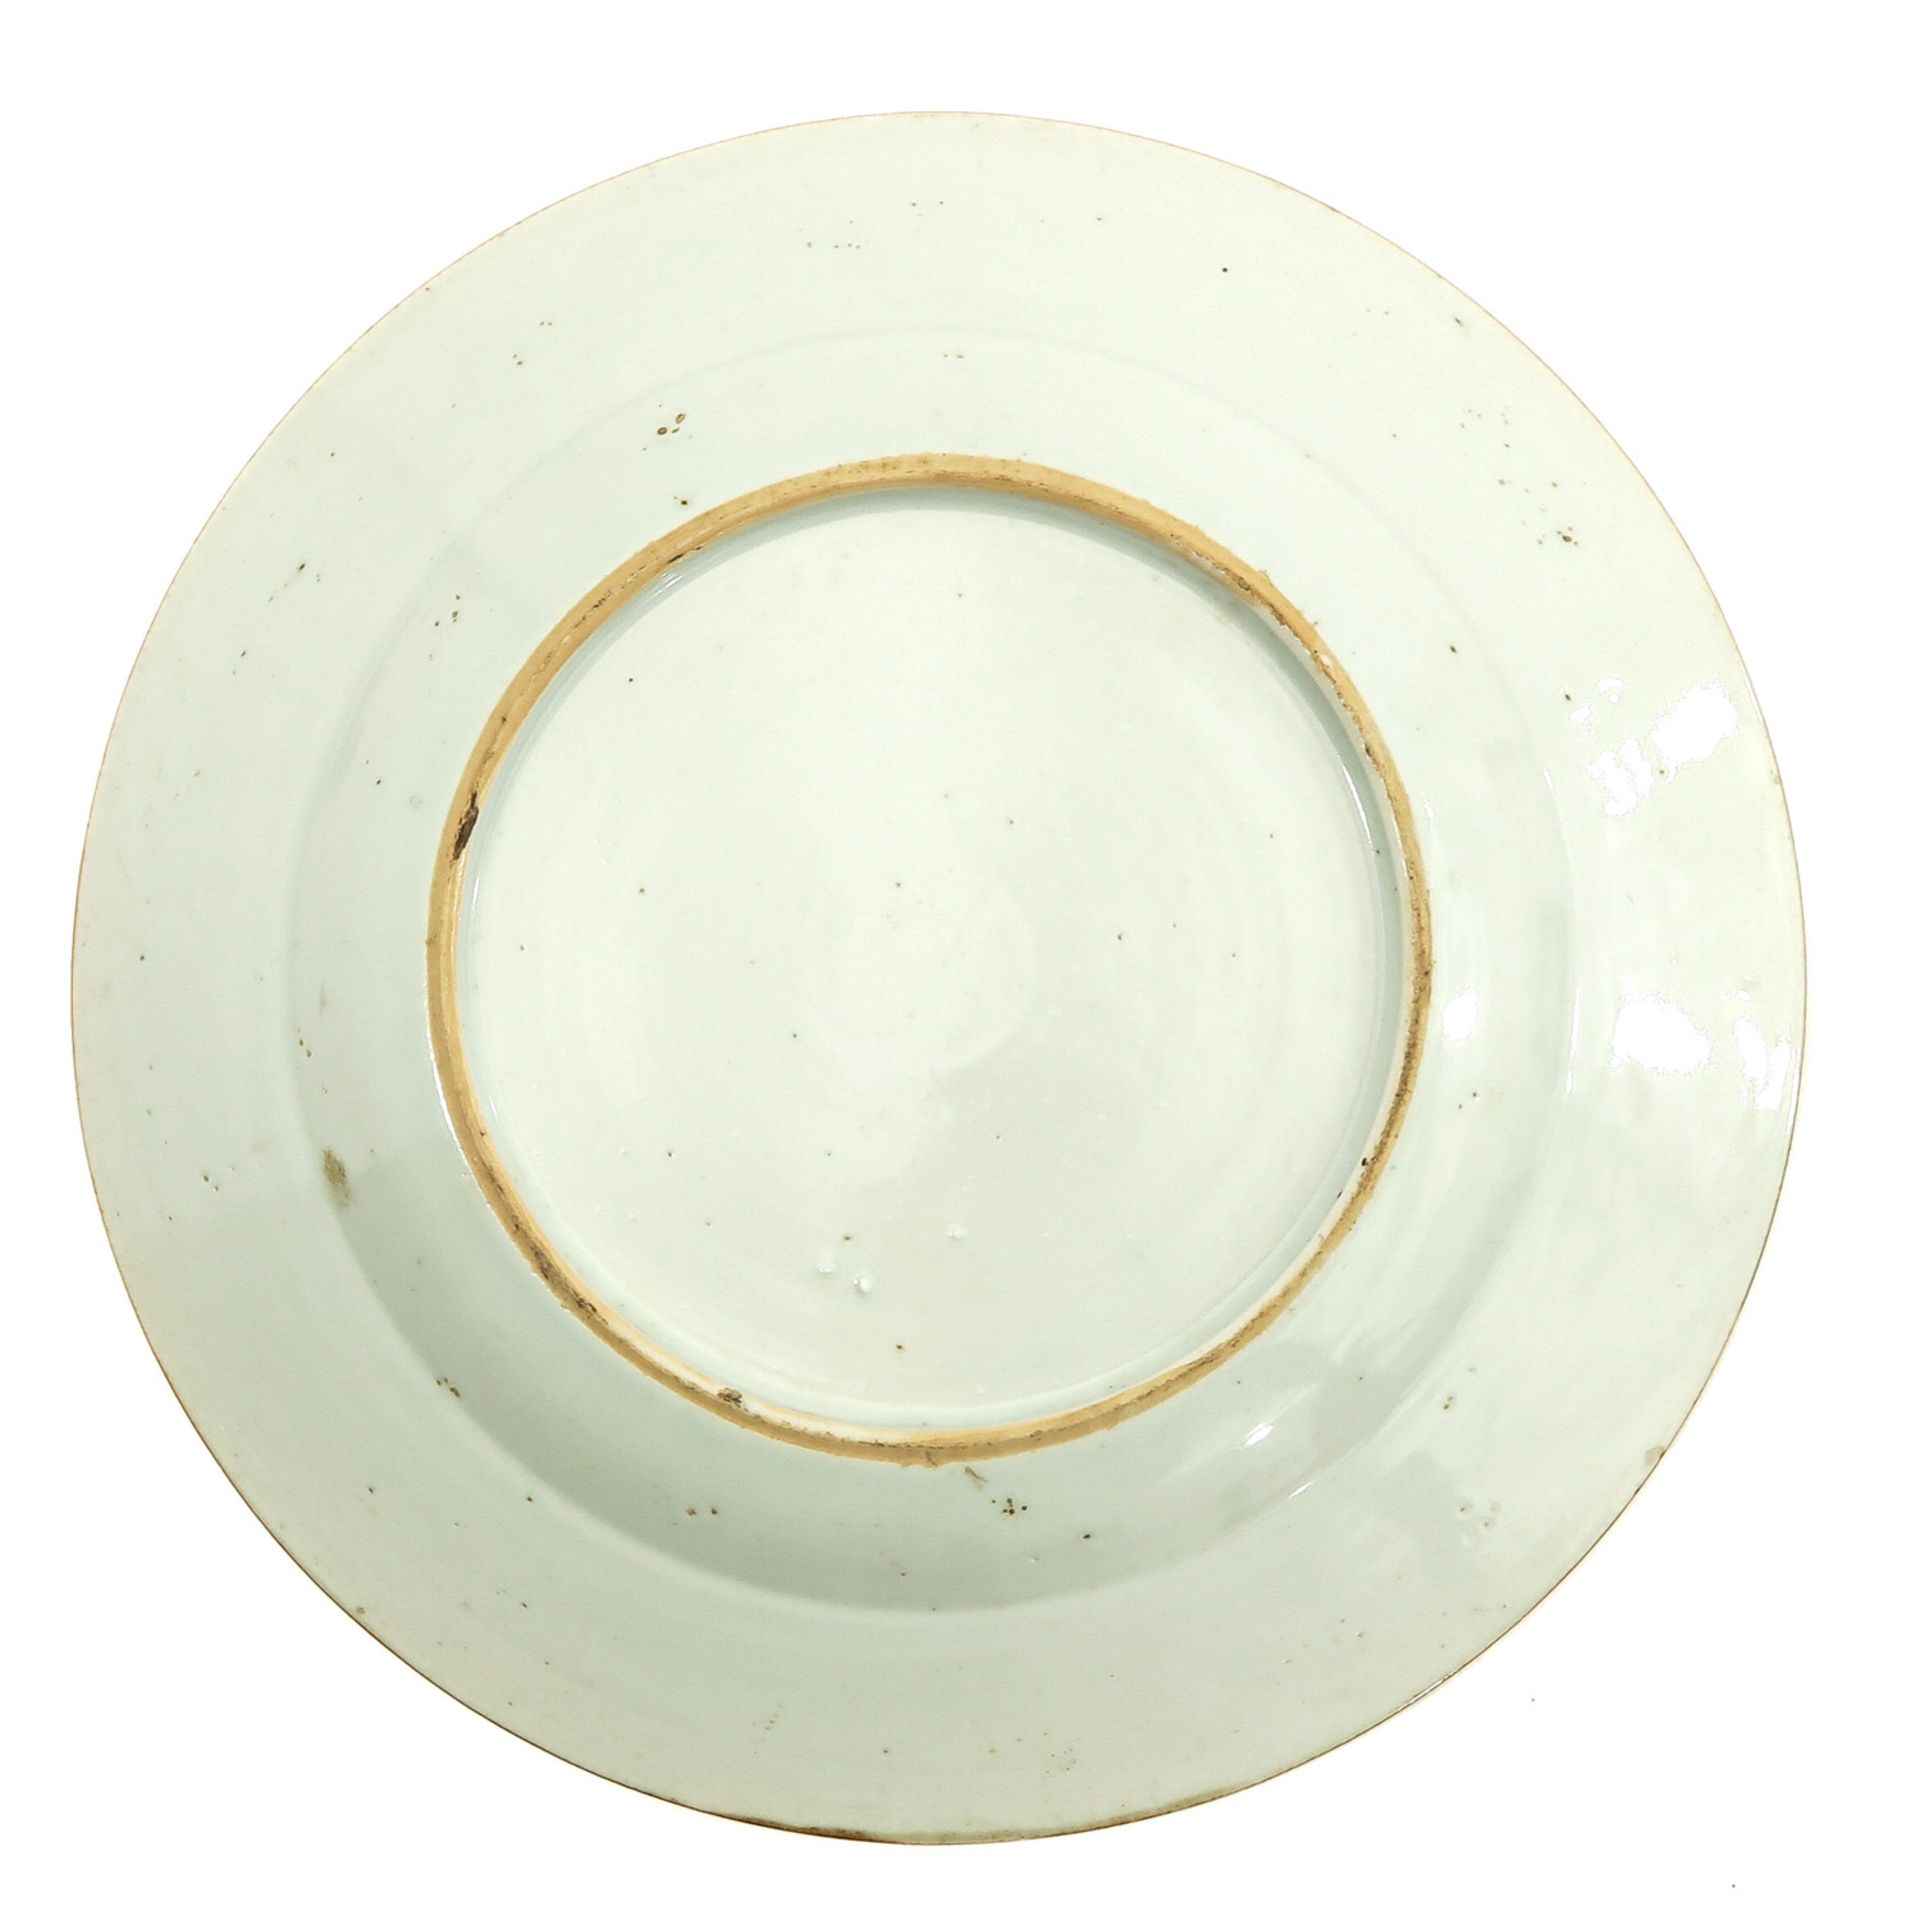 A Series of 3 Imari Plates - Image 4 of 10